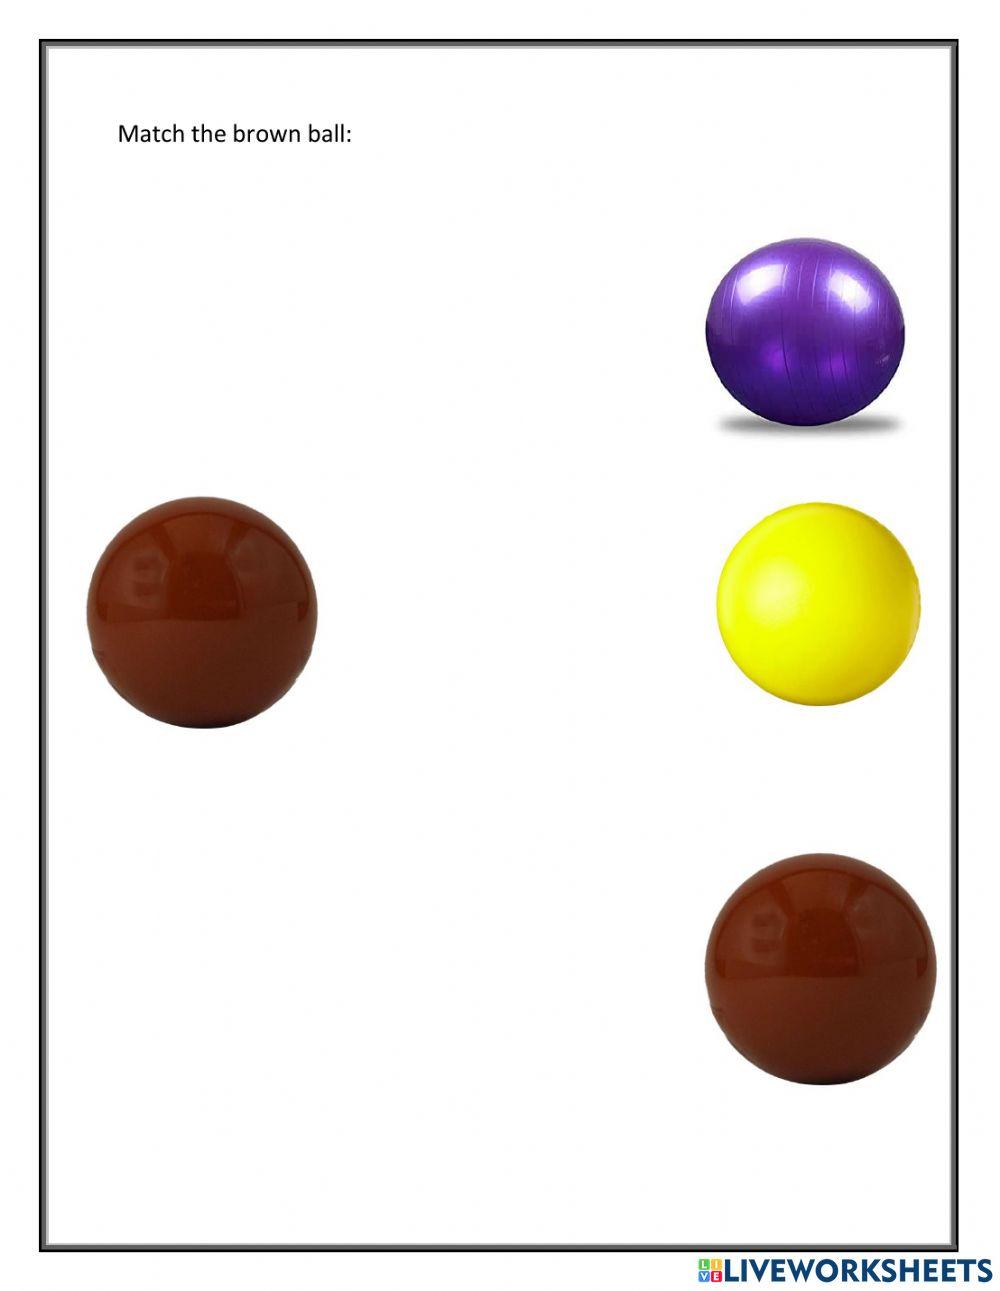 Match the brown ball